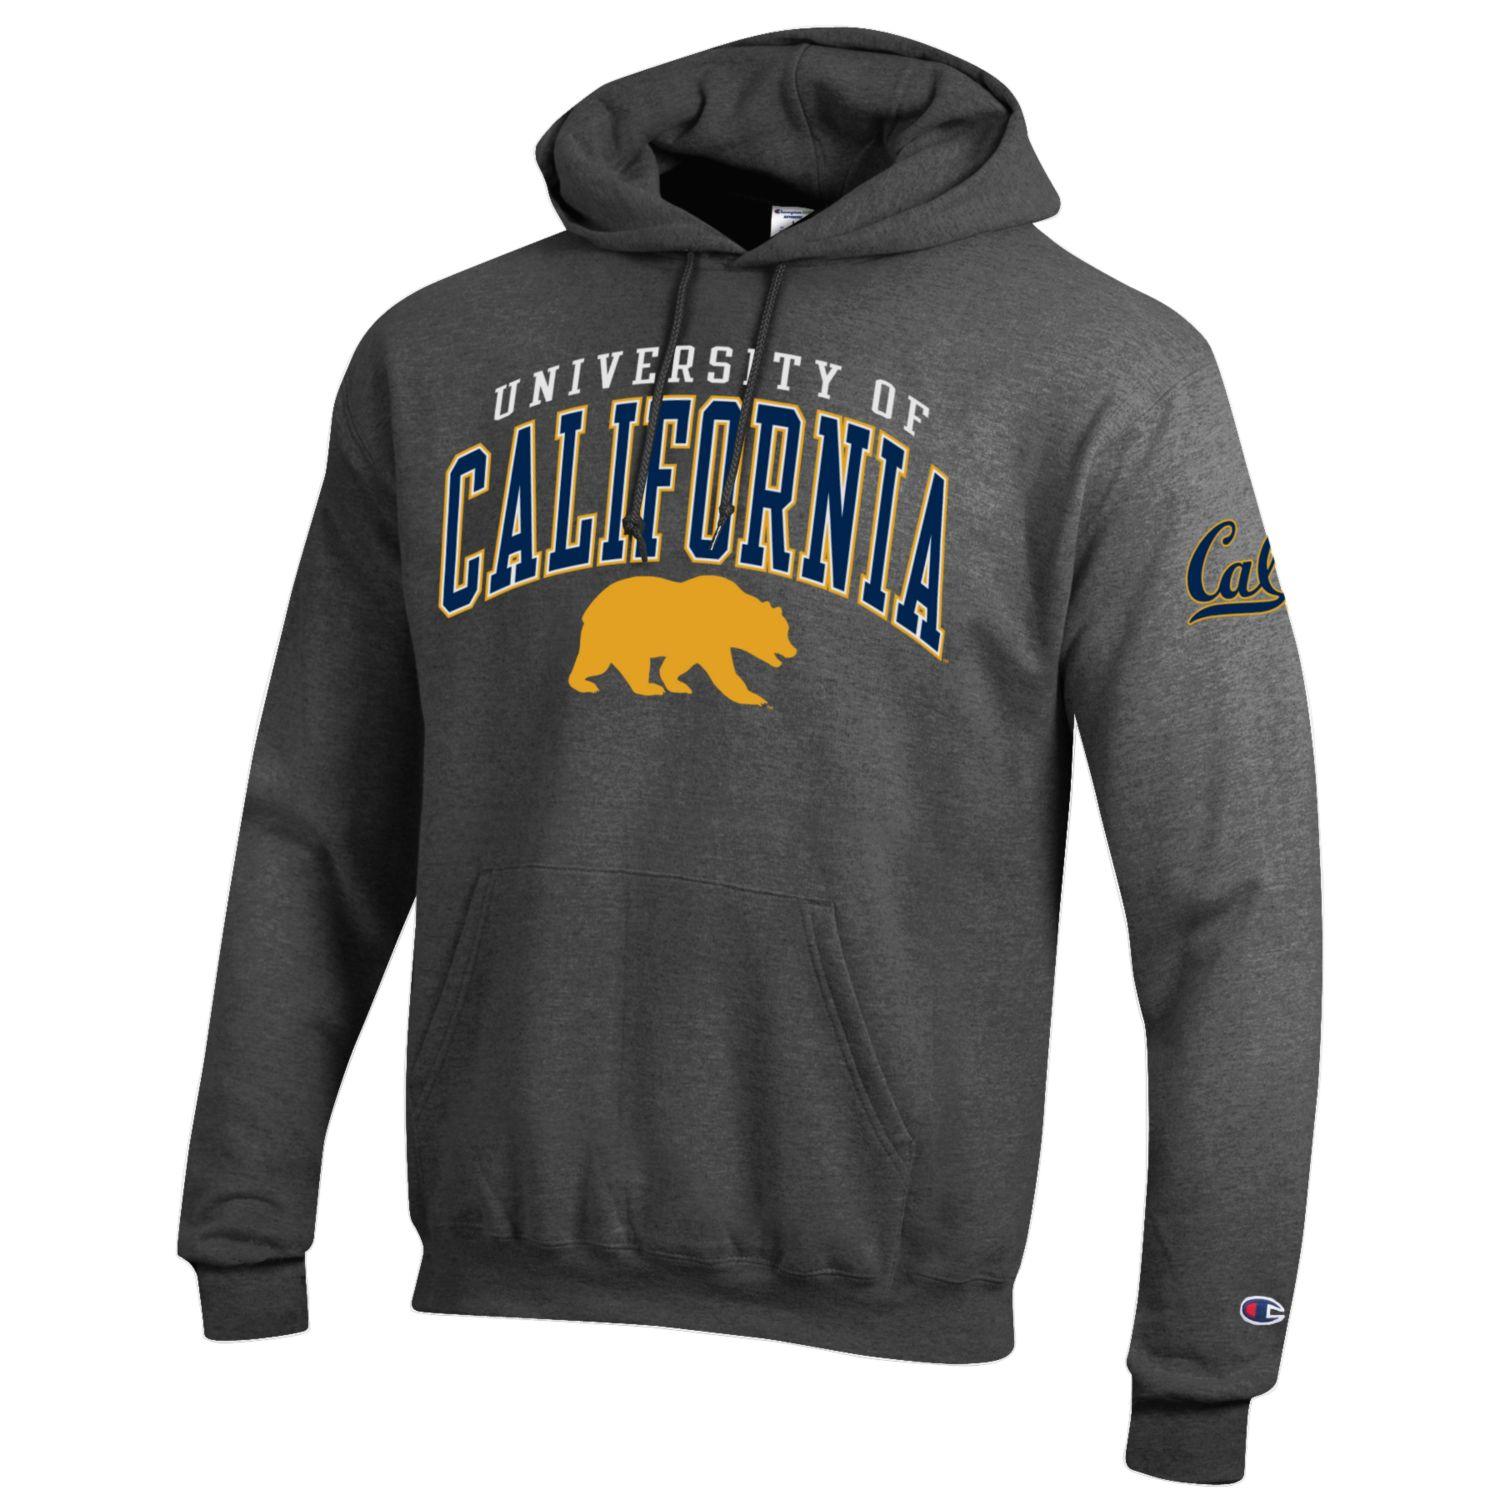 University of California Berkeley Arch & bear hoodie sweatshirt-Charcoal-Shop College Wear